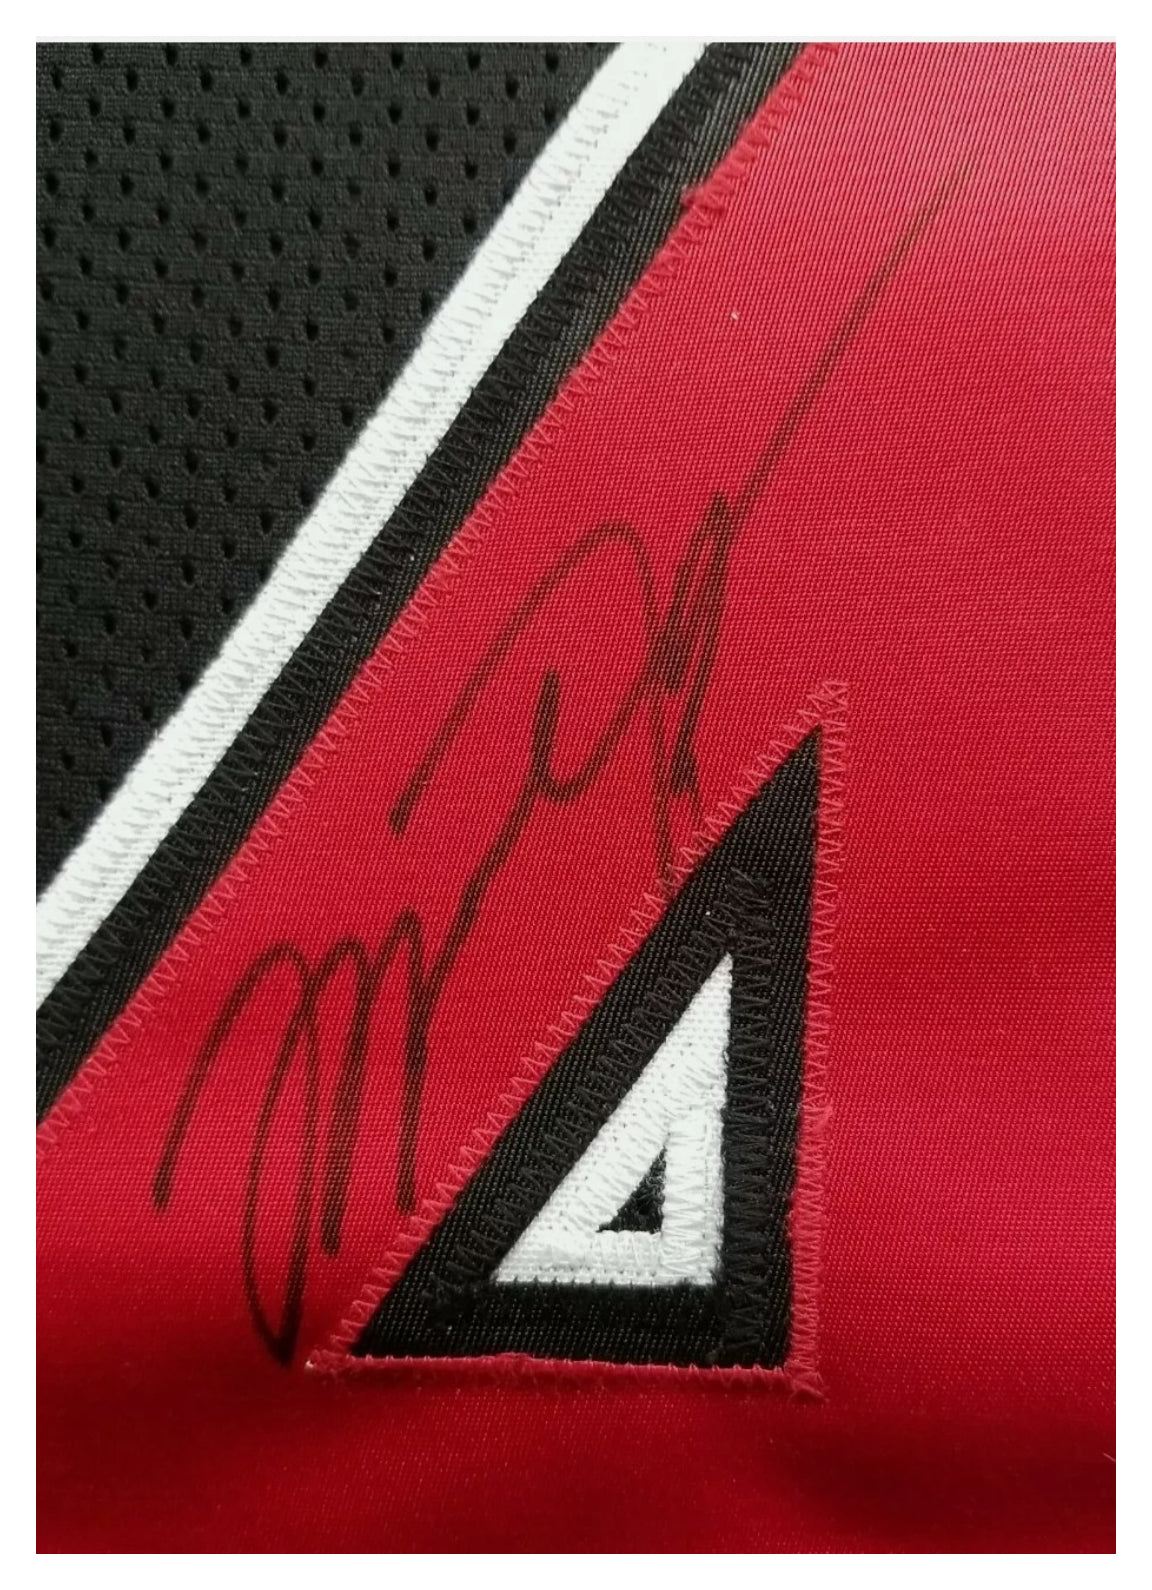 Lot Detail - Michael Jordan Signed Chicago Bulls Black Alternate Jersey  (JSA)